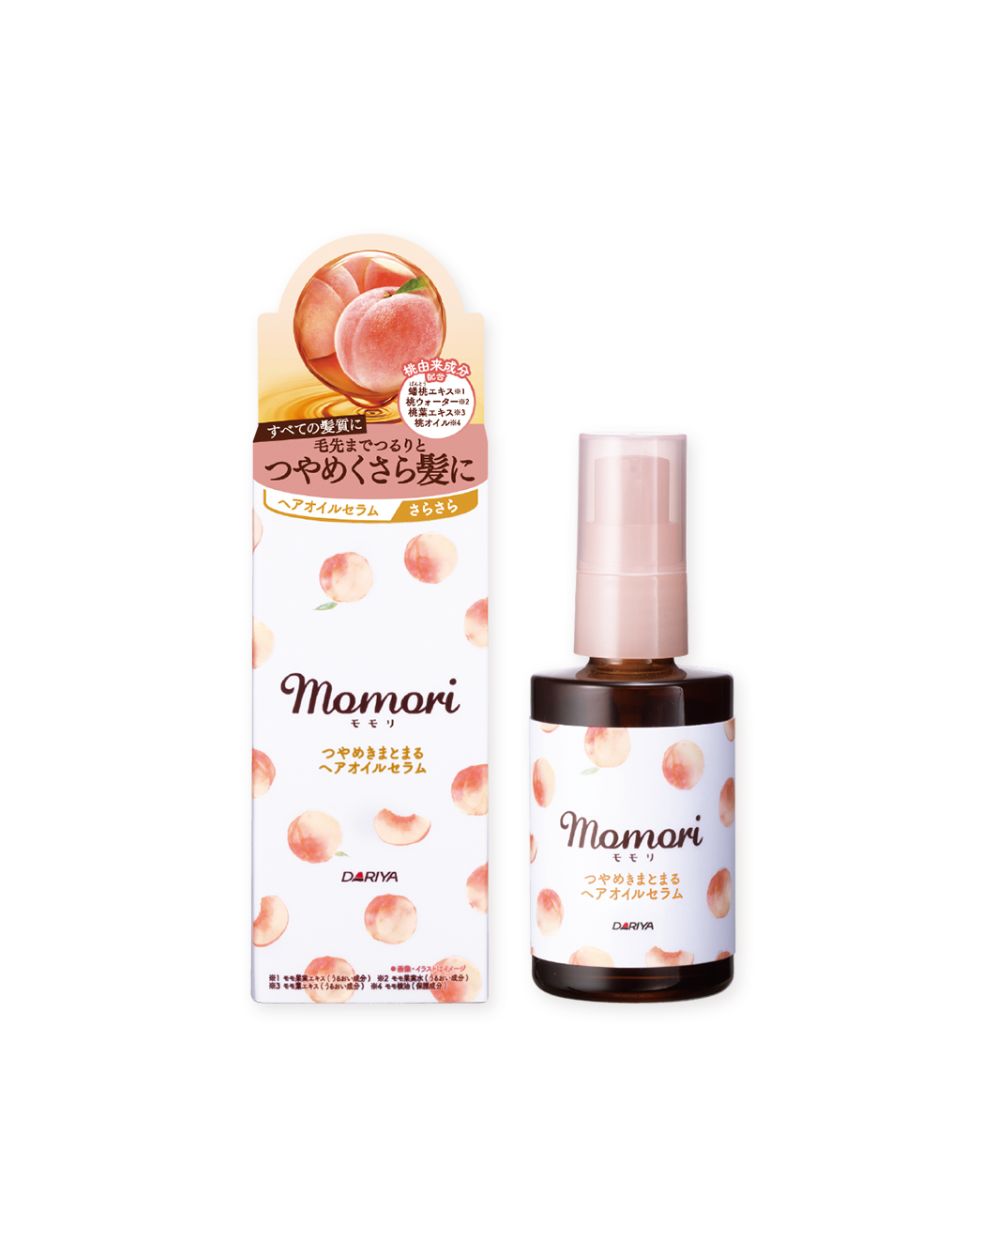 DARIYA - Momori Peach Rich Shiny Hair Oil Serum